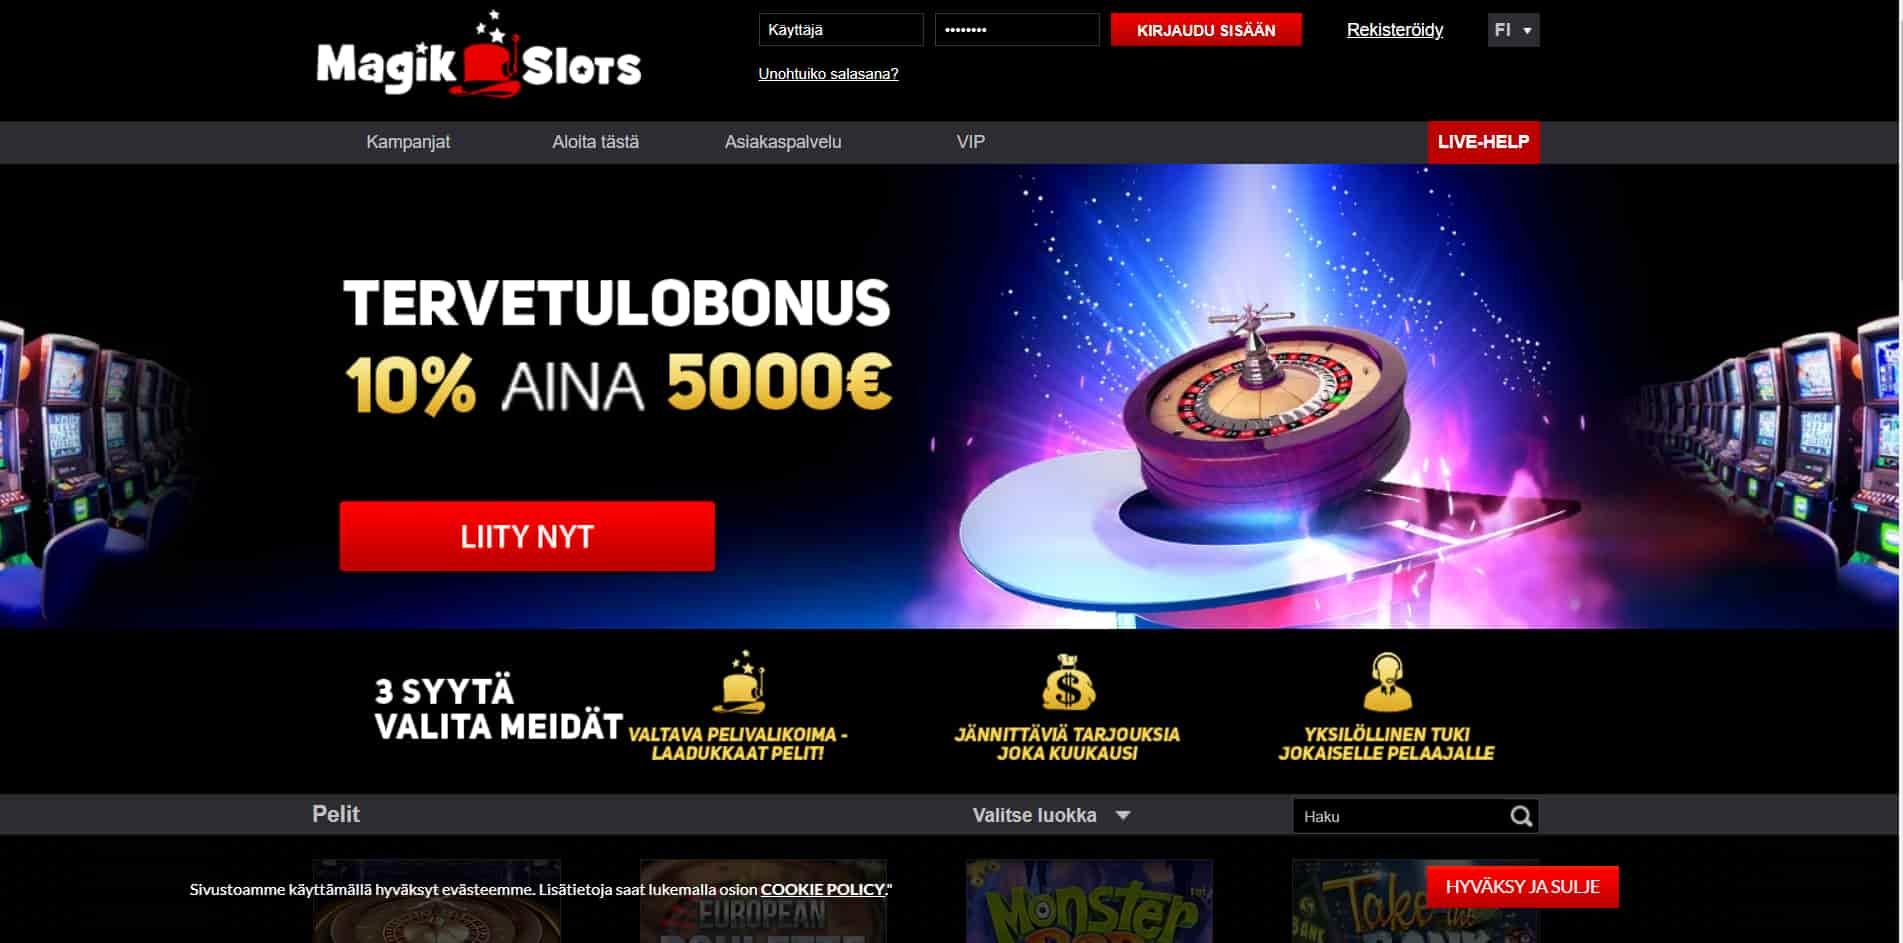 Magik Slots casino homepage